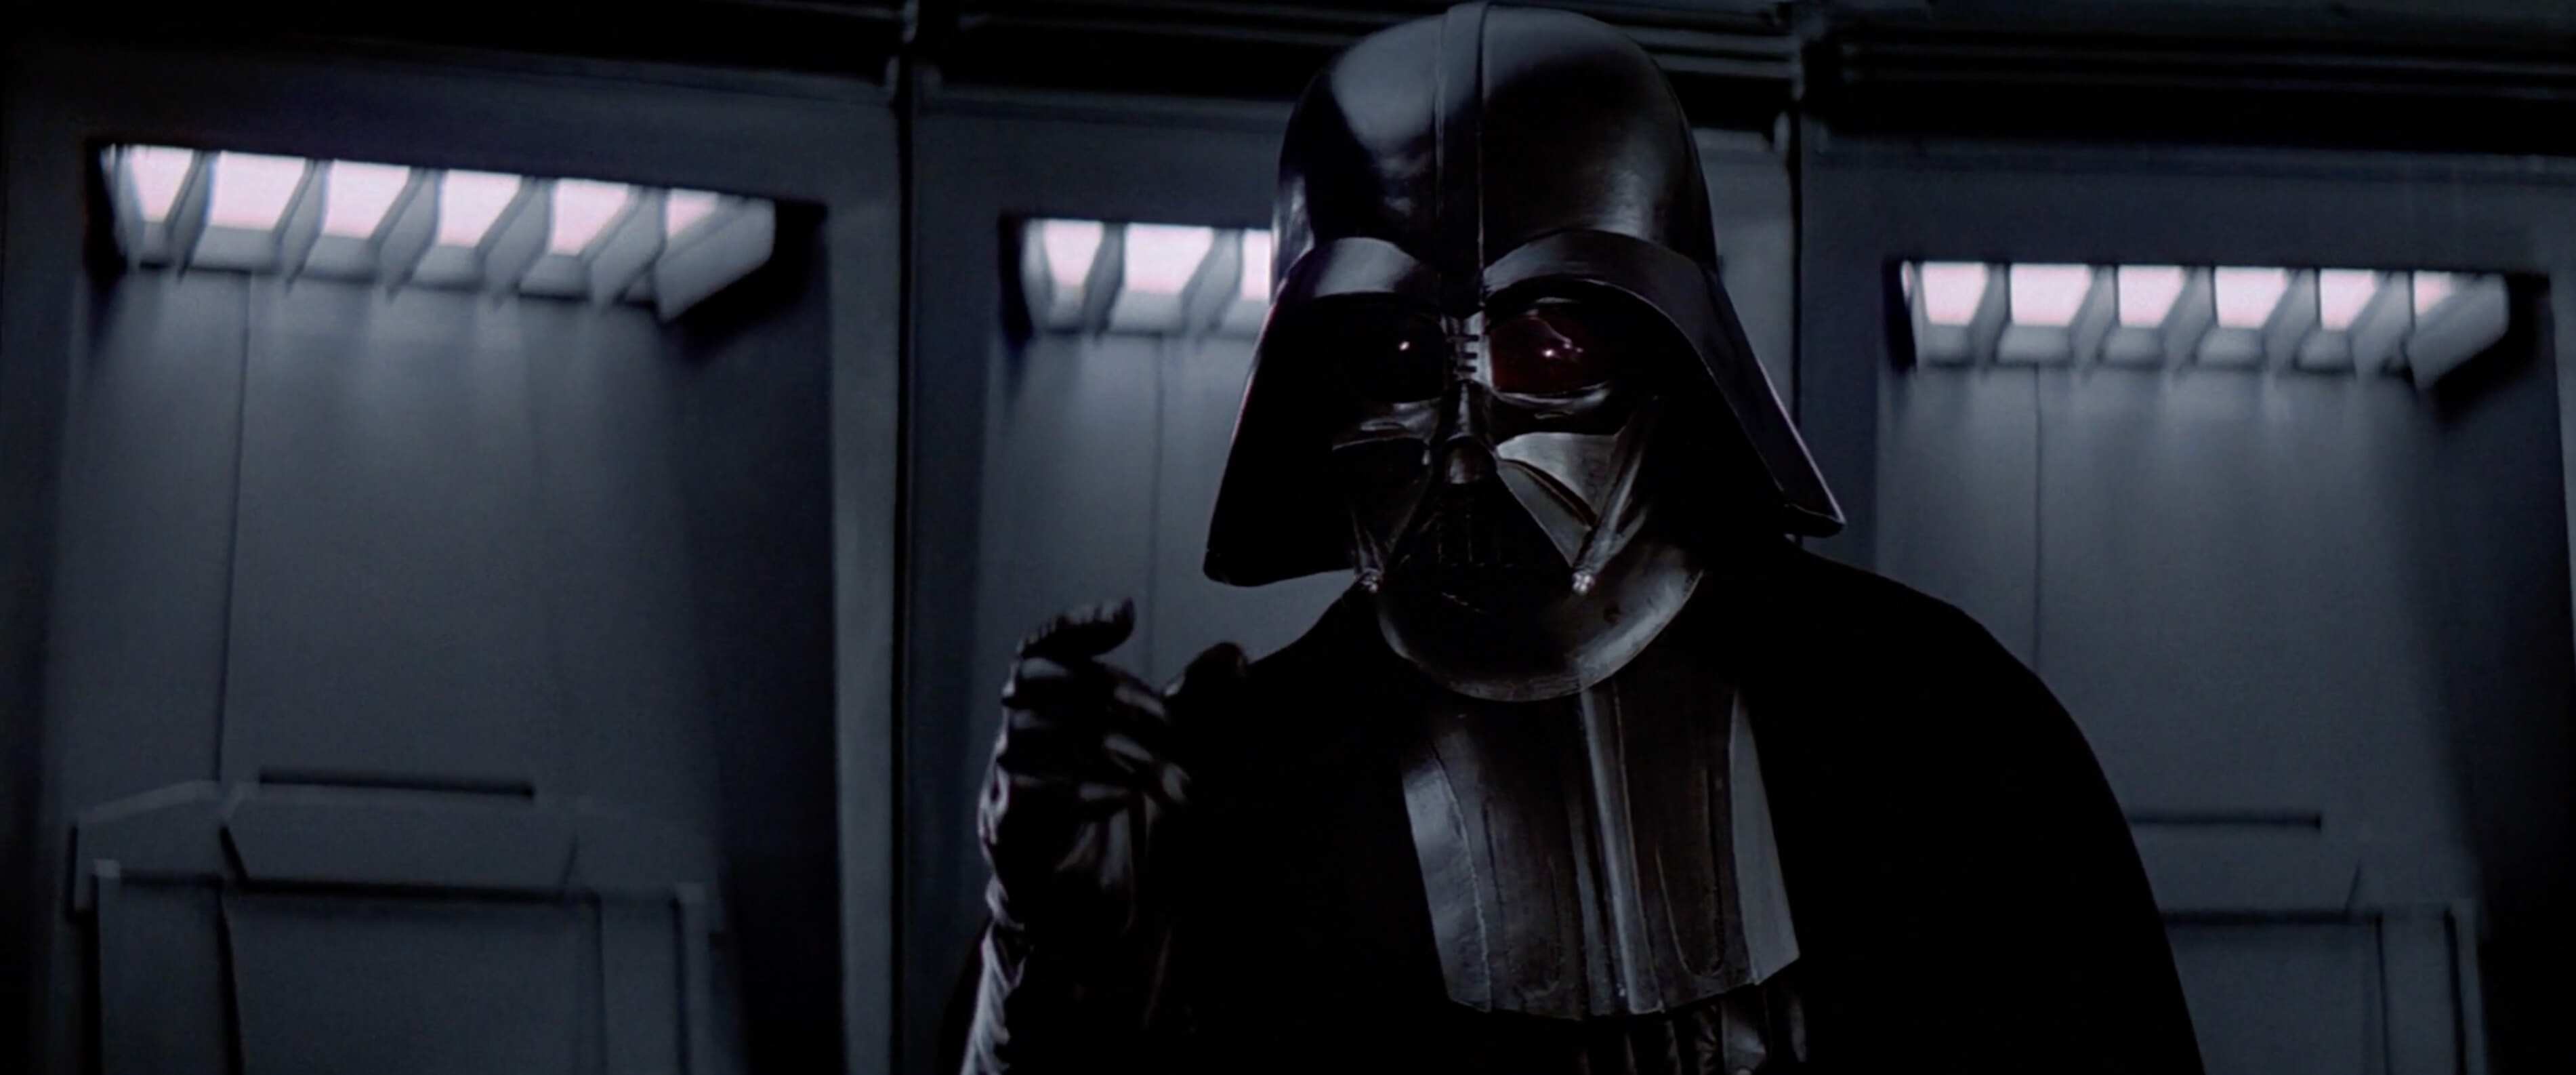 Darth Vader chokes Admiral Motti in the “I find your lack of faith disturbing” scene in “Star Wars”.